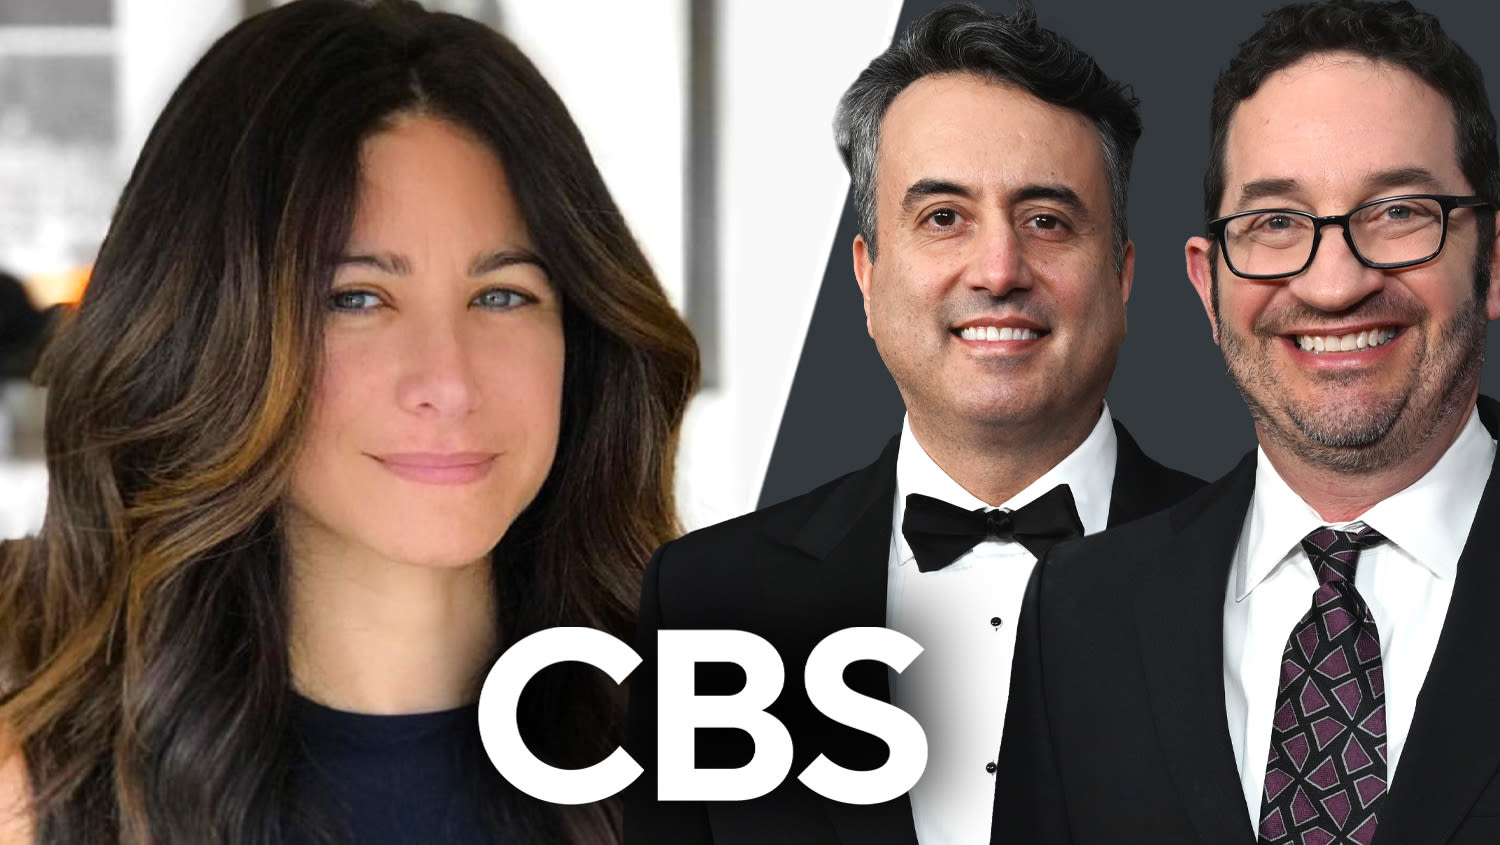 CBS Orders Pilot For ‘DMV’ Comedy From Dana Klein, Development Room For Vampire Comedy From ‘Ghosts’ Showrunners